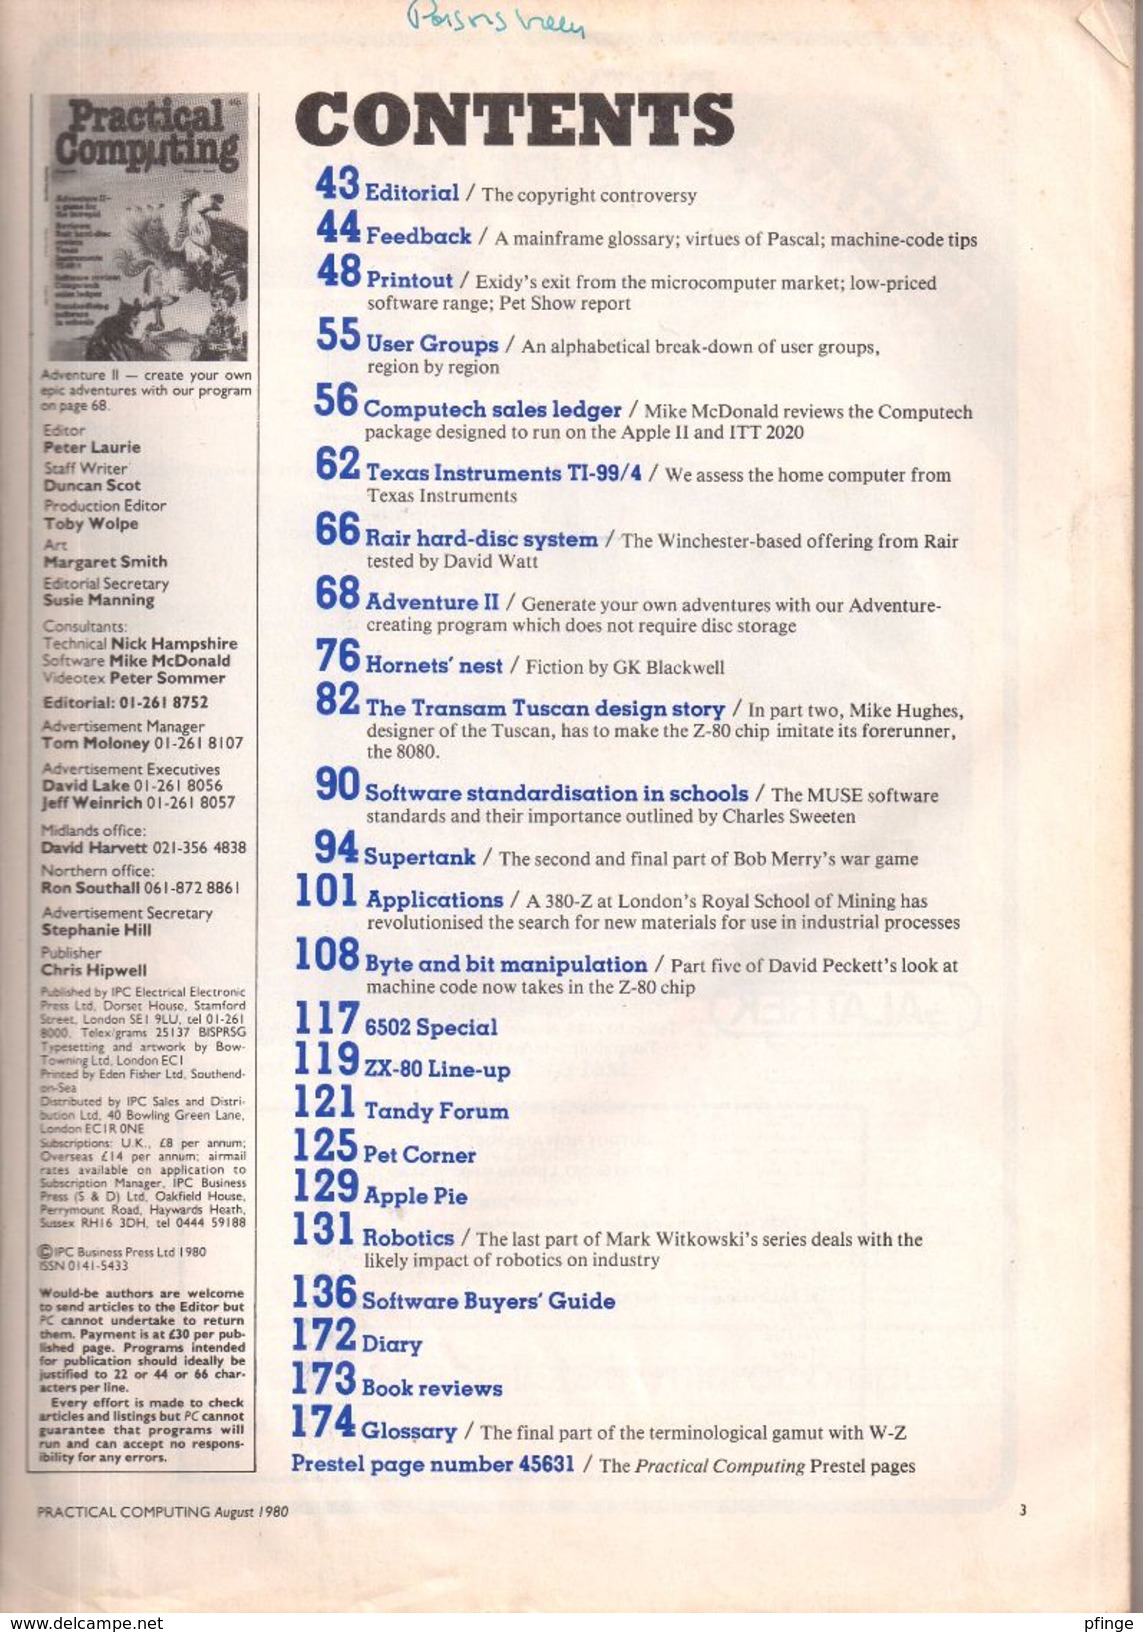 Practical Computing Vol 3 Issue 8, 1980 - Computing/ IT/ Internet